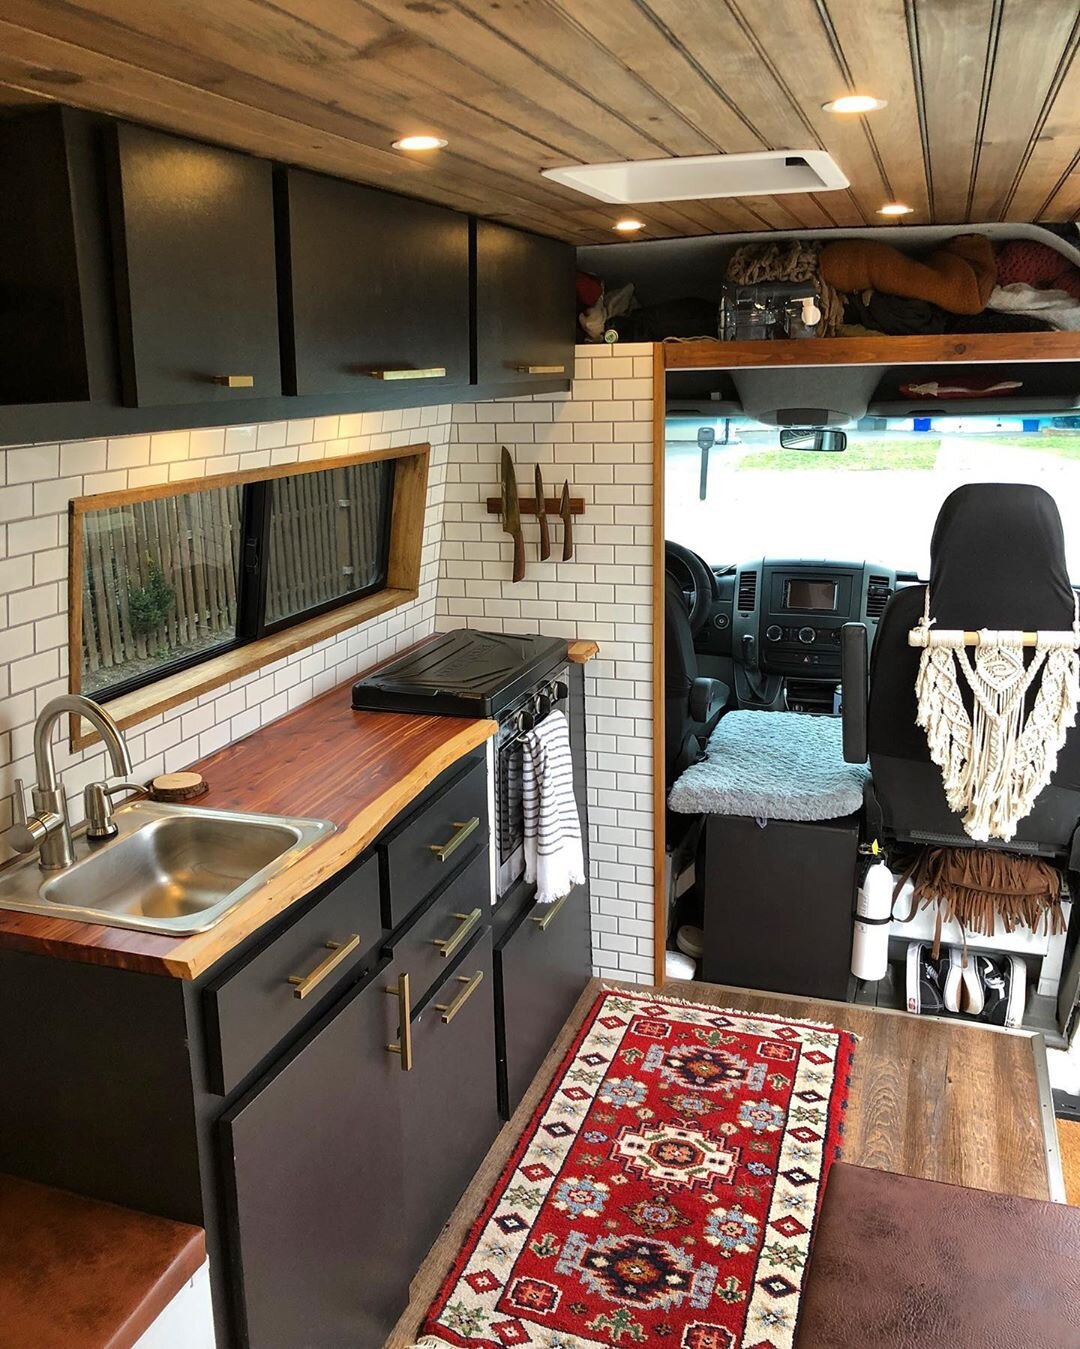 Campervan kitchen image by @voyage_on